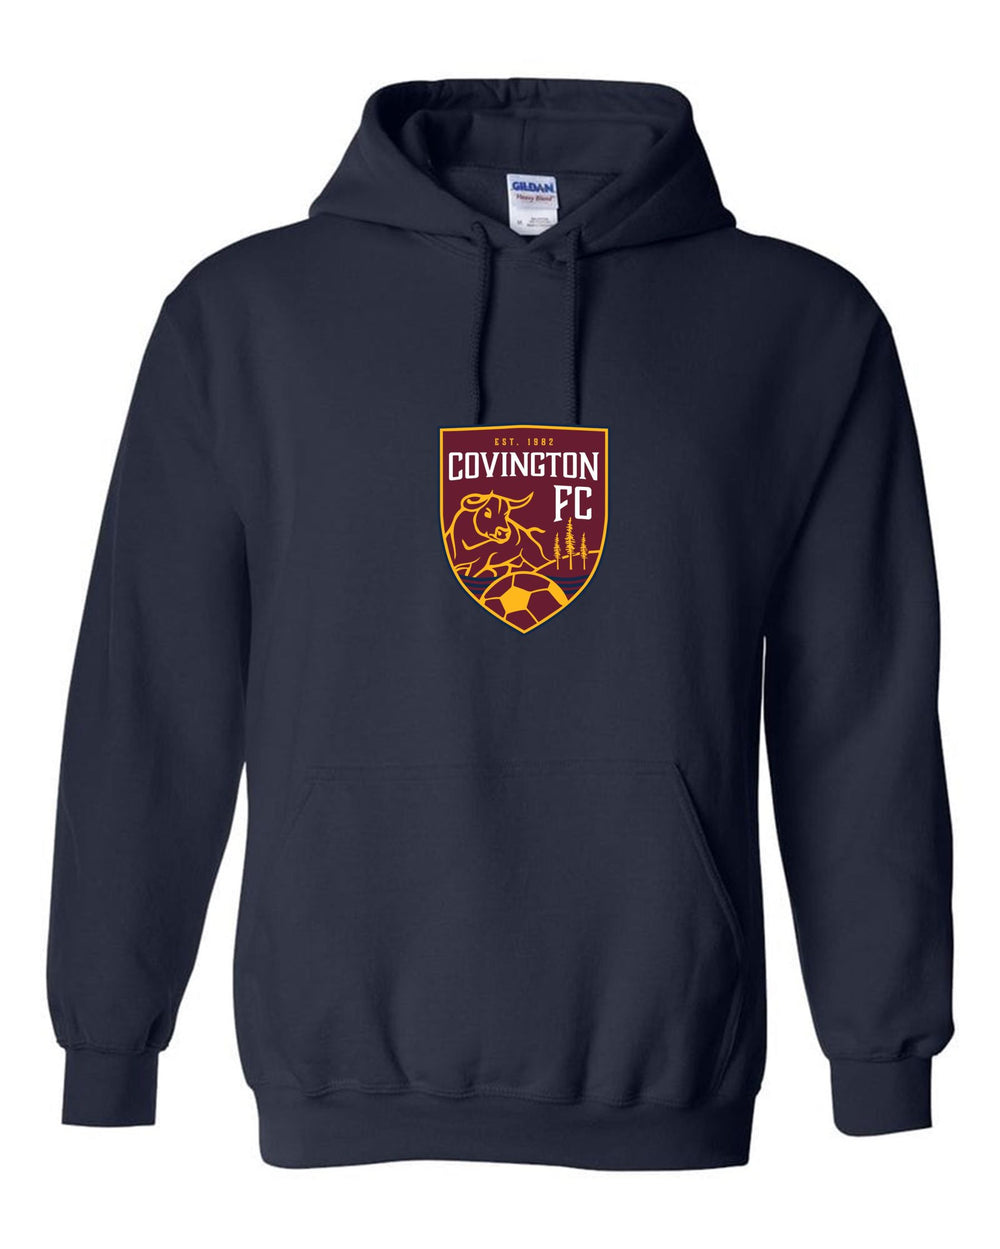 CYSA Hooded Sweatshirt - Navy, Gold or Grey CYSA Spiritwear NAVY MENS MEDIUM - Third Coast Soccer